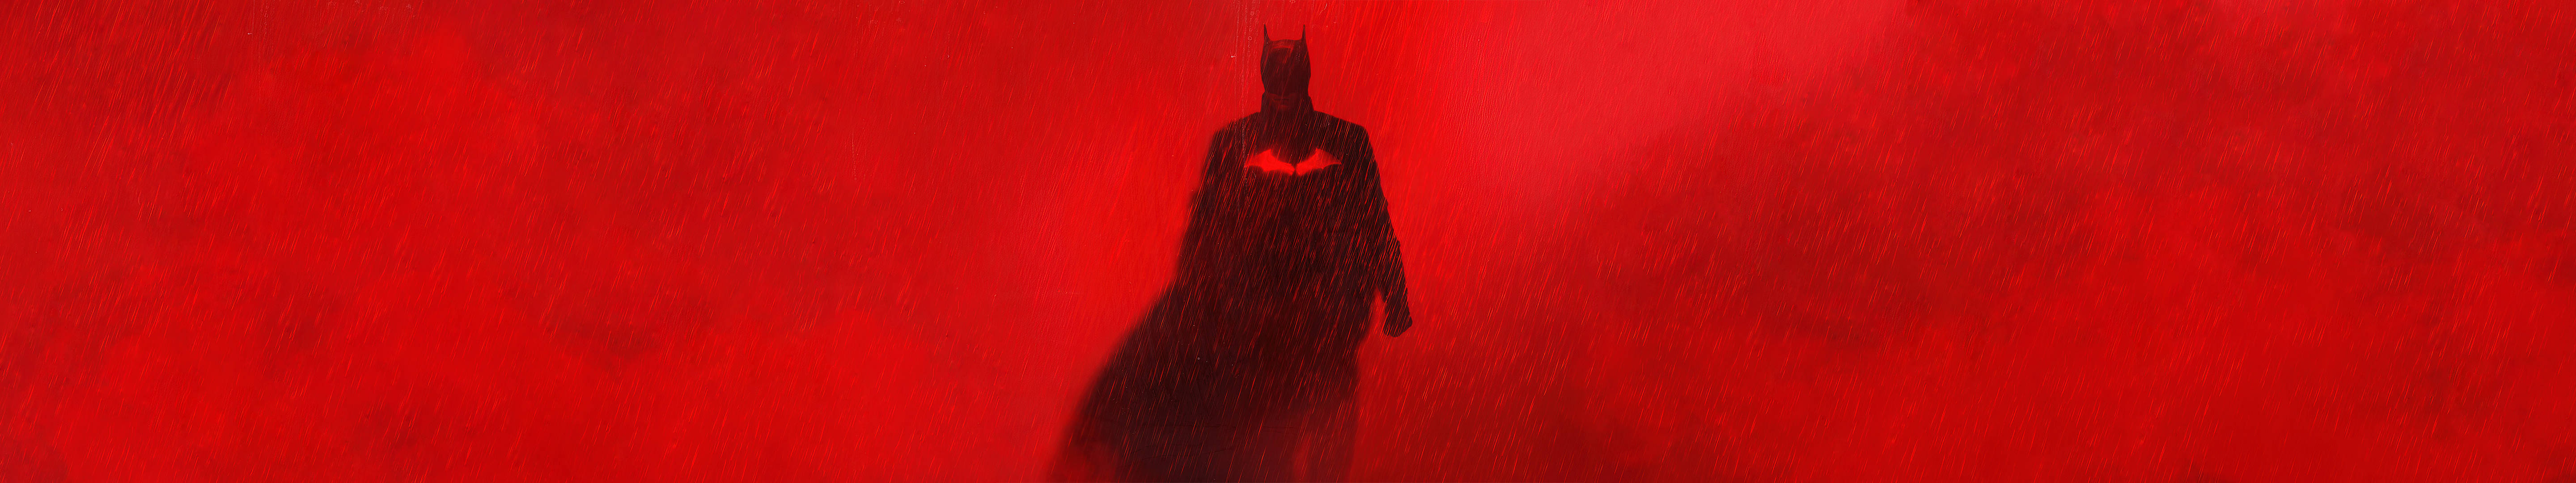 Batman In The Rain Three Screen Wallpaper